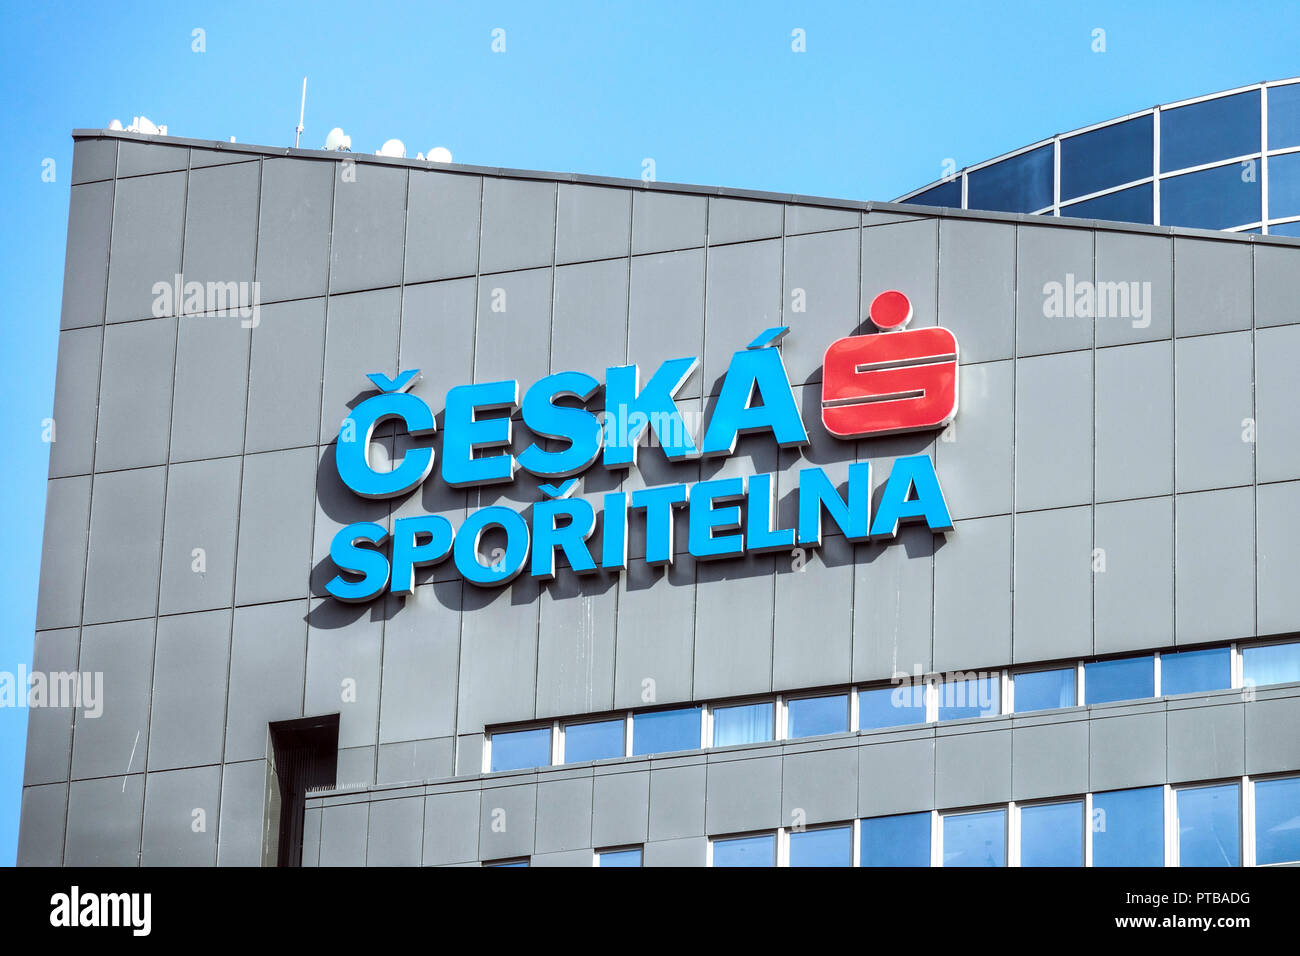 Die Ceska Sporitelna logo, zentrale Pankrac, Prag, Tschechische Republik Stockfoto